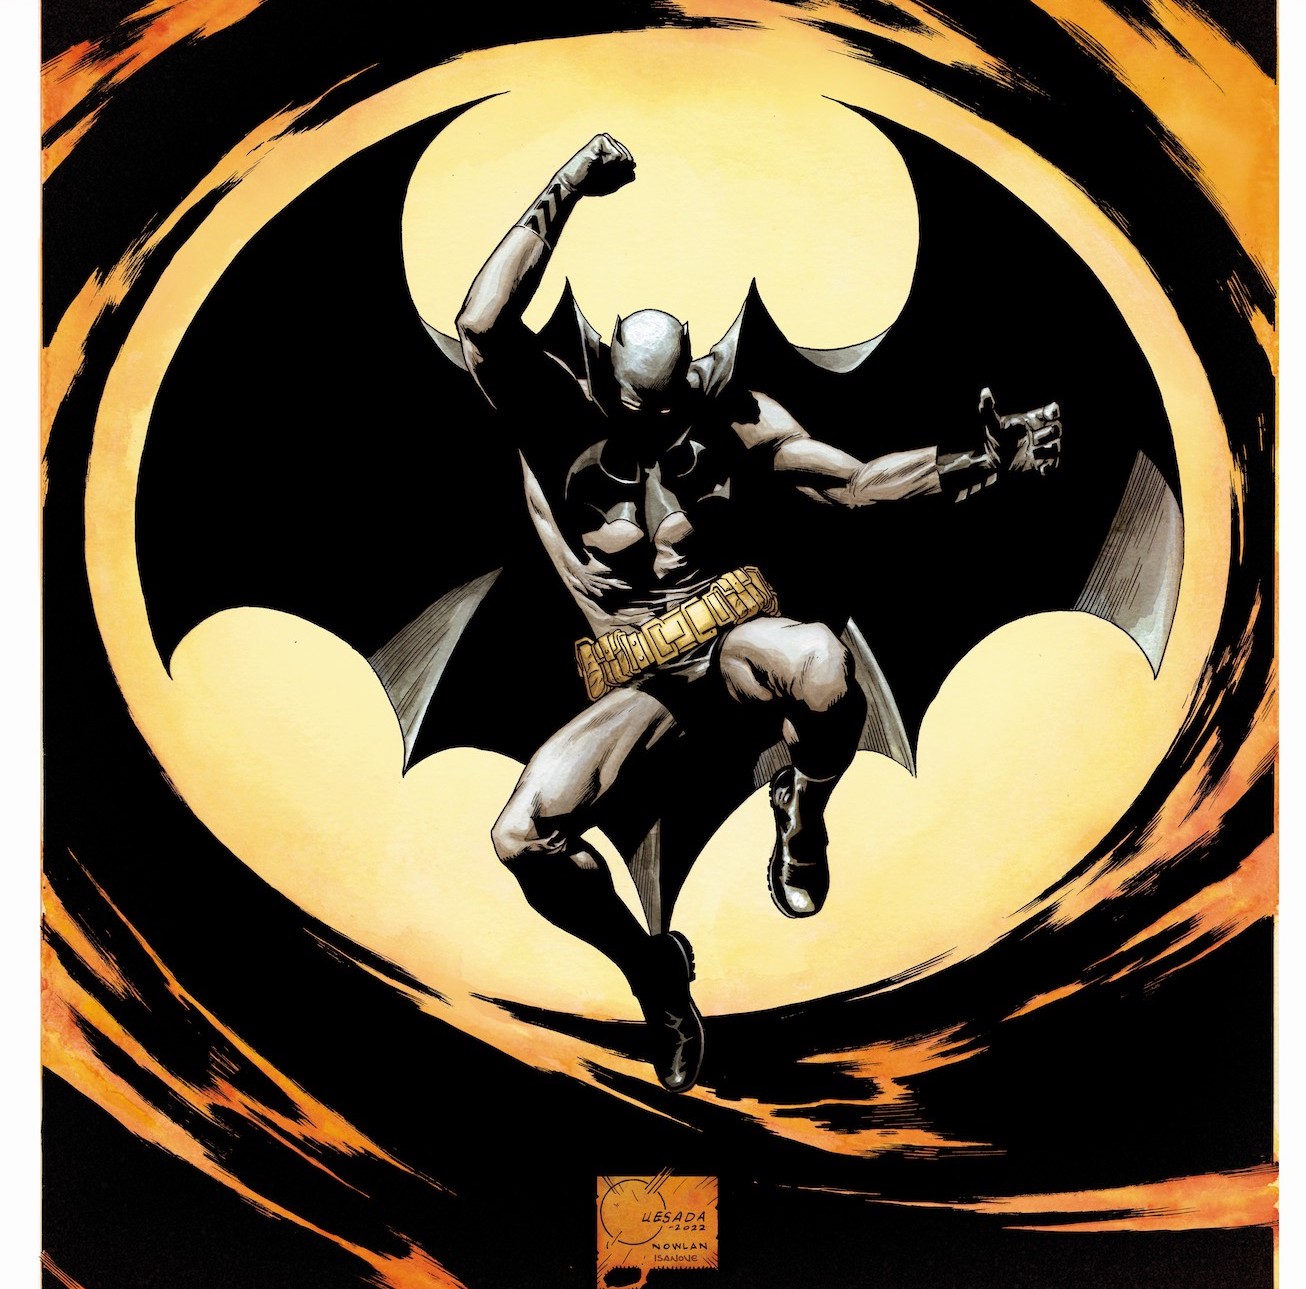 NYCC 2022: DC’s Jim Lee & Friends panel reveals 'Batman' cover art by Joe Quesada